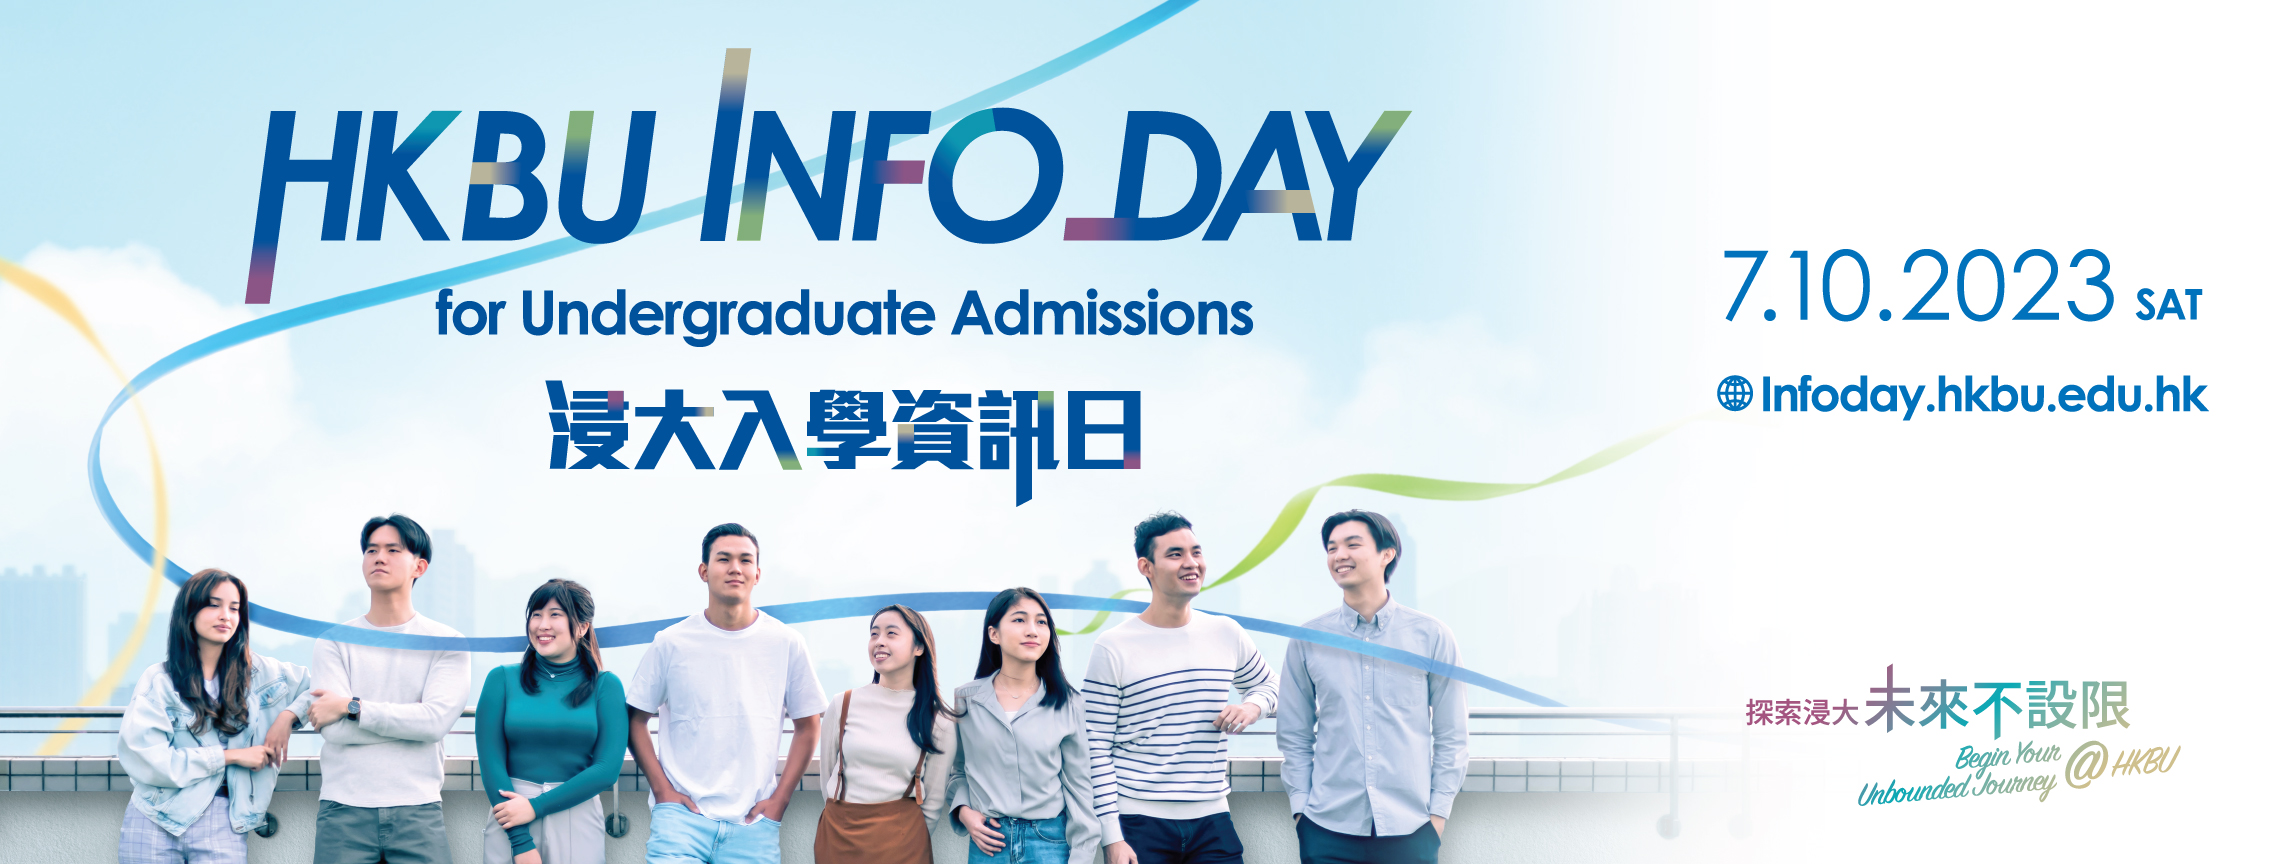 HKBU Information Day for Undergraduate Admissions 2023